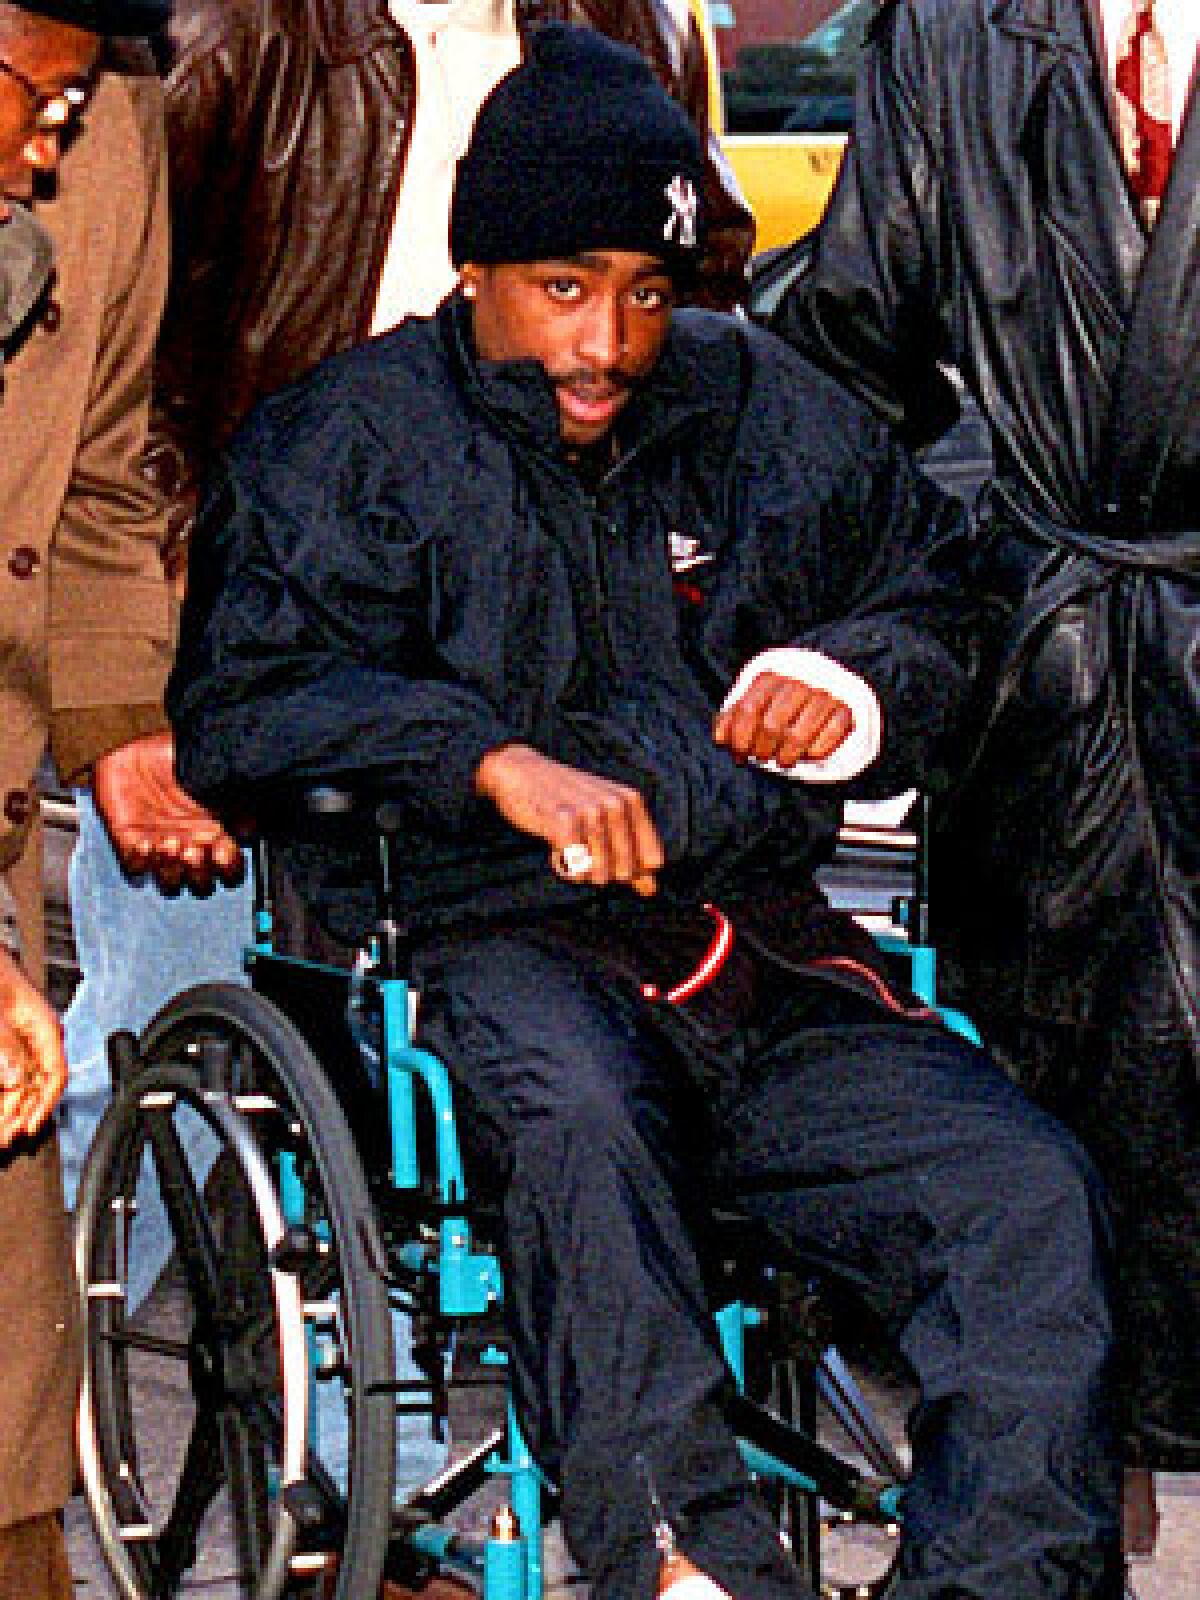 Remember Me: Tupac Shakur’s Biggest Moments